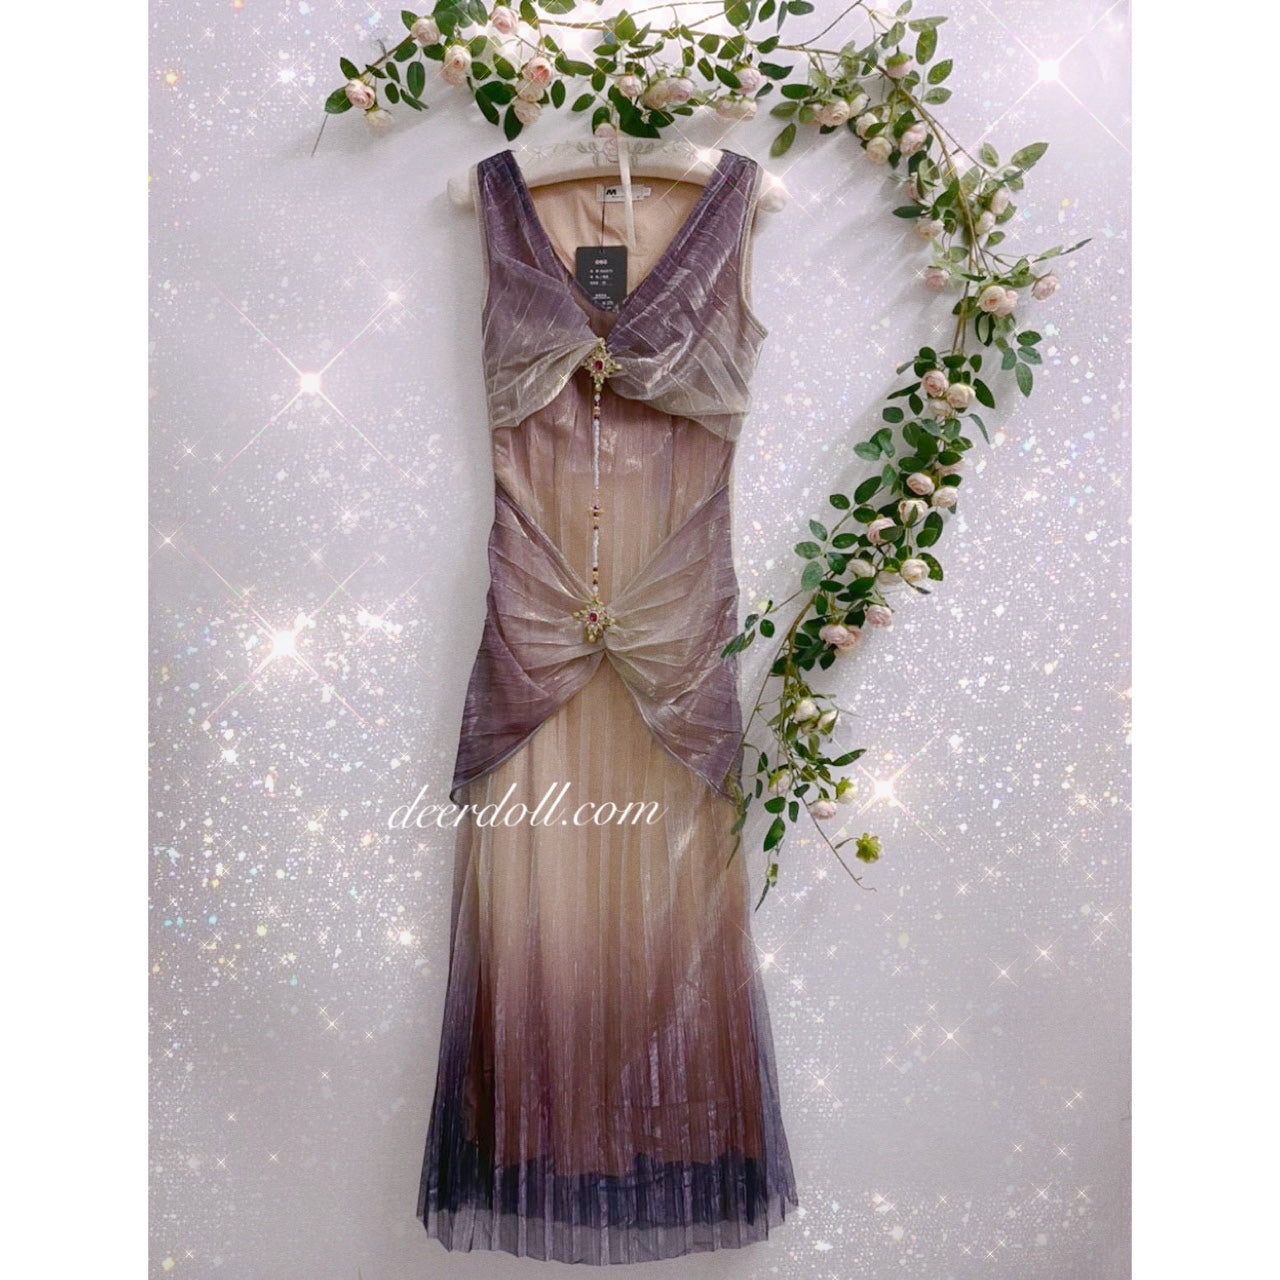 Metylda Celestial Goddess Dress 